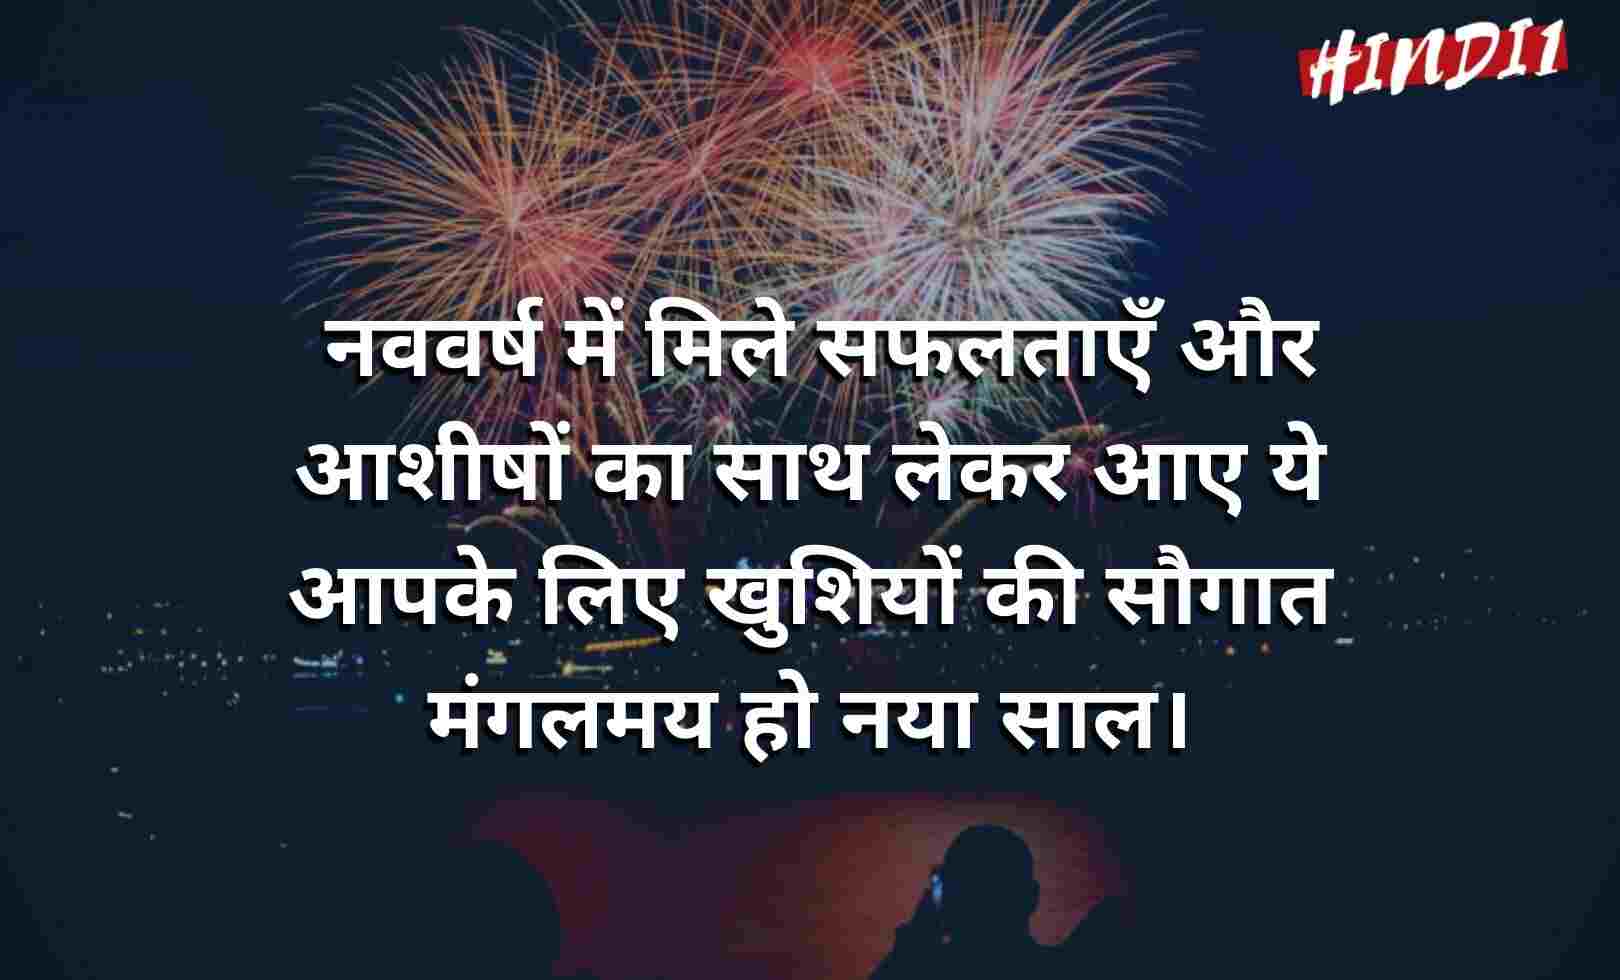 Happy New Year Slogans In Hindi